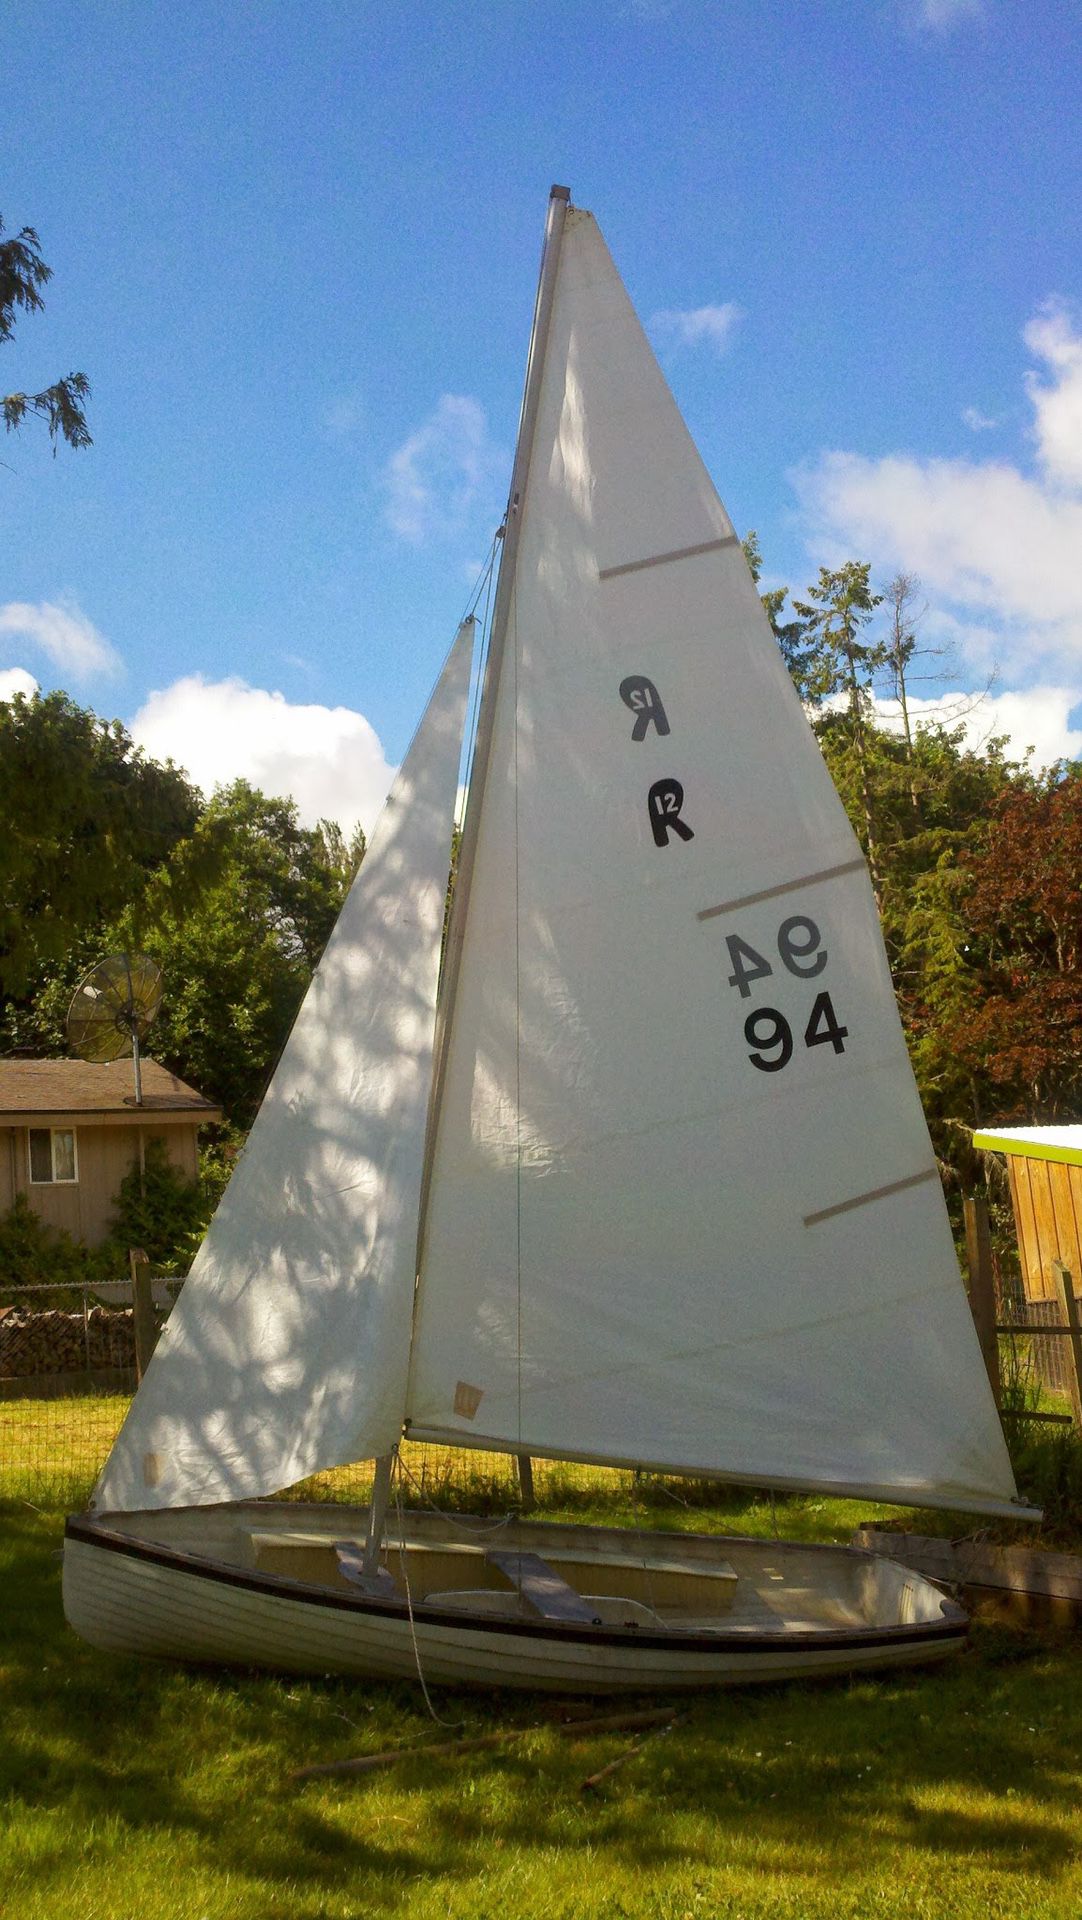 12’ ranger (1970’s) fiberglass sail boat